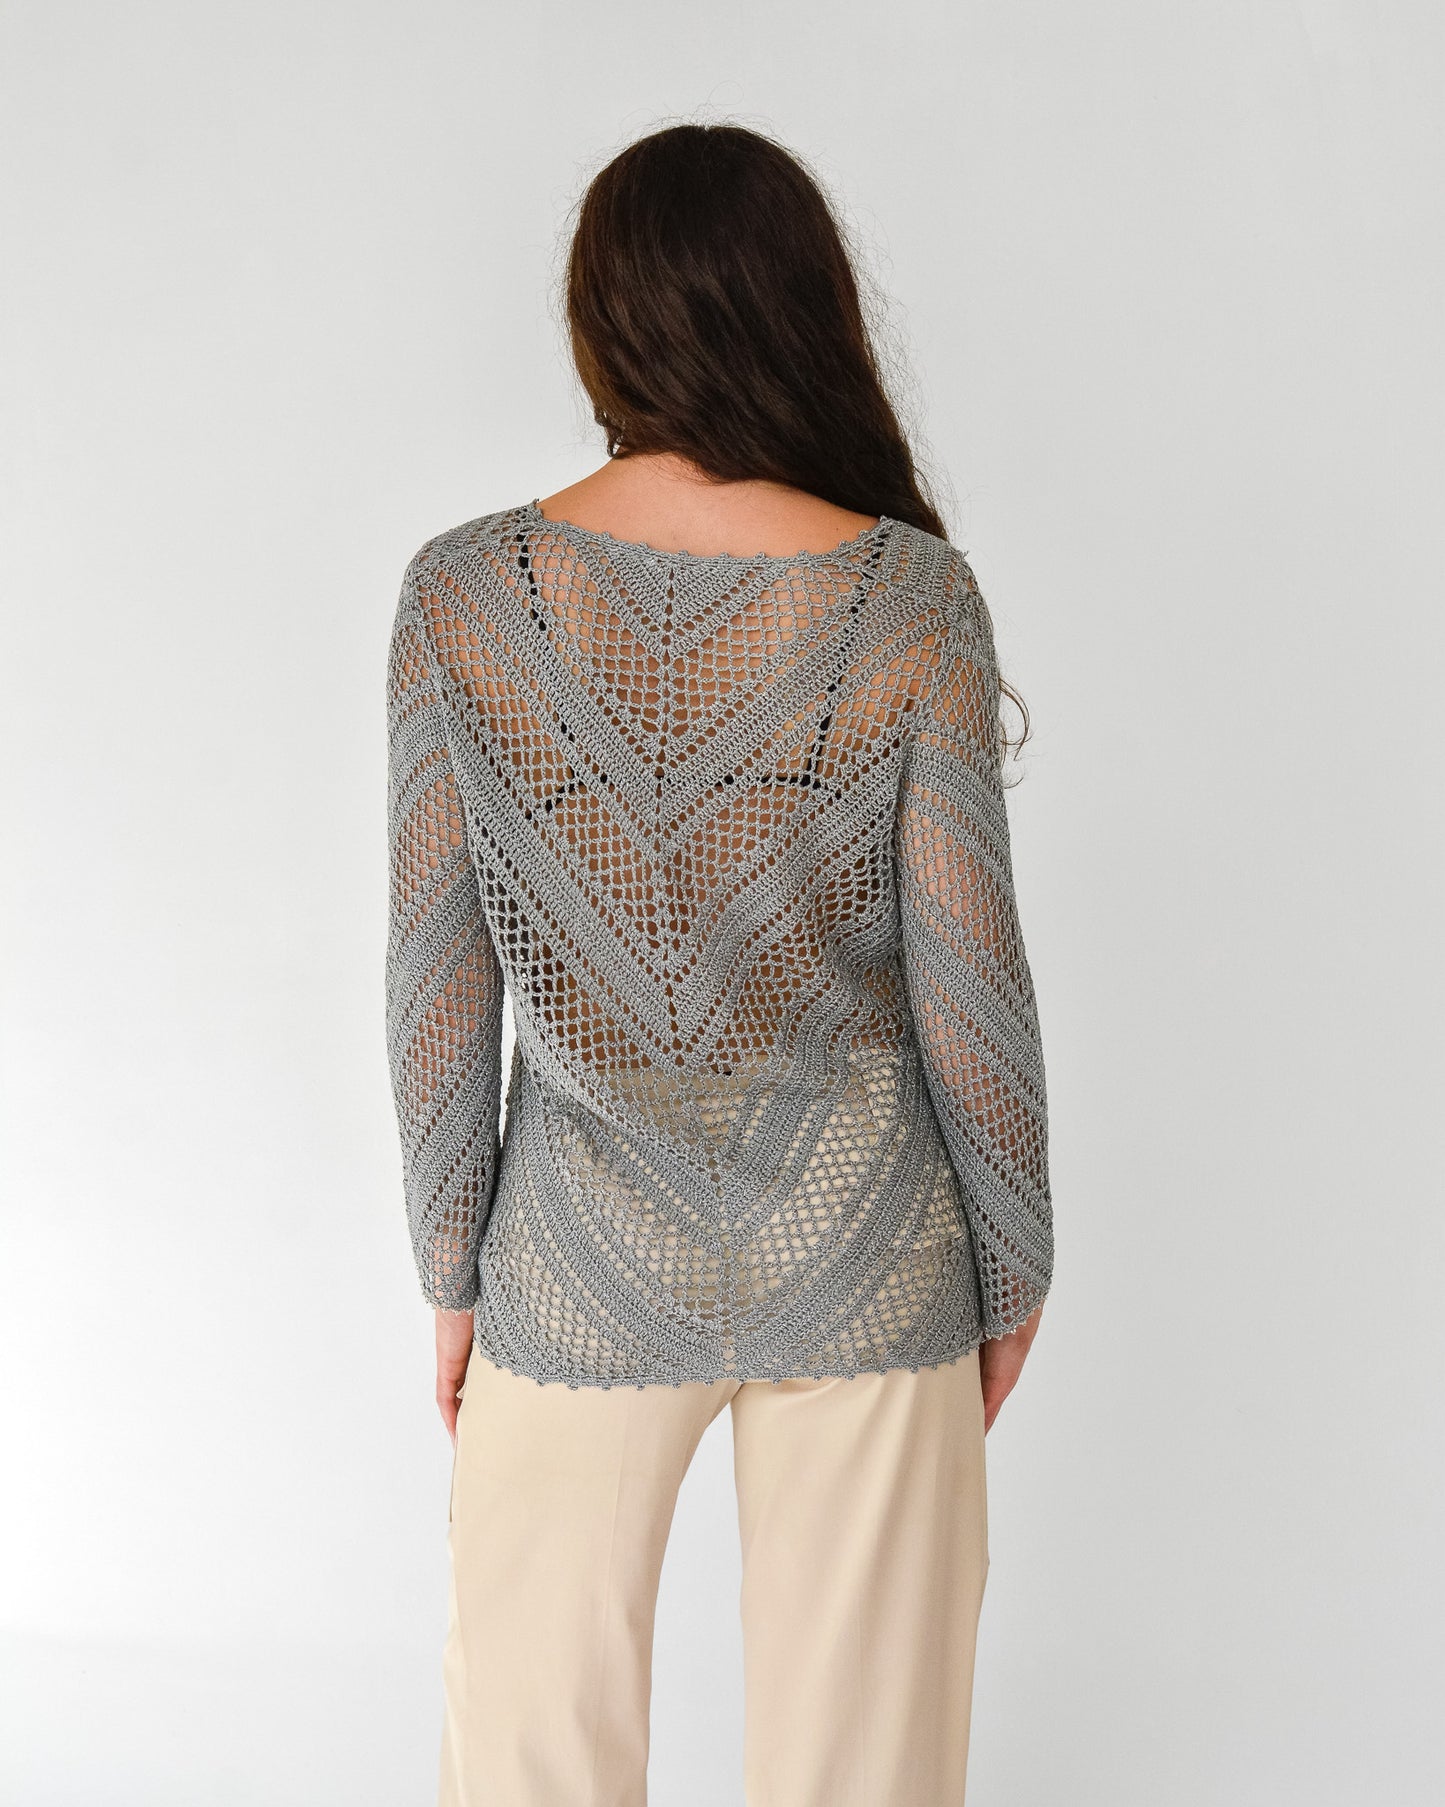 Silver Metallic Crochet Sweater (M)